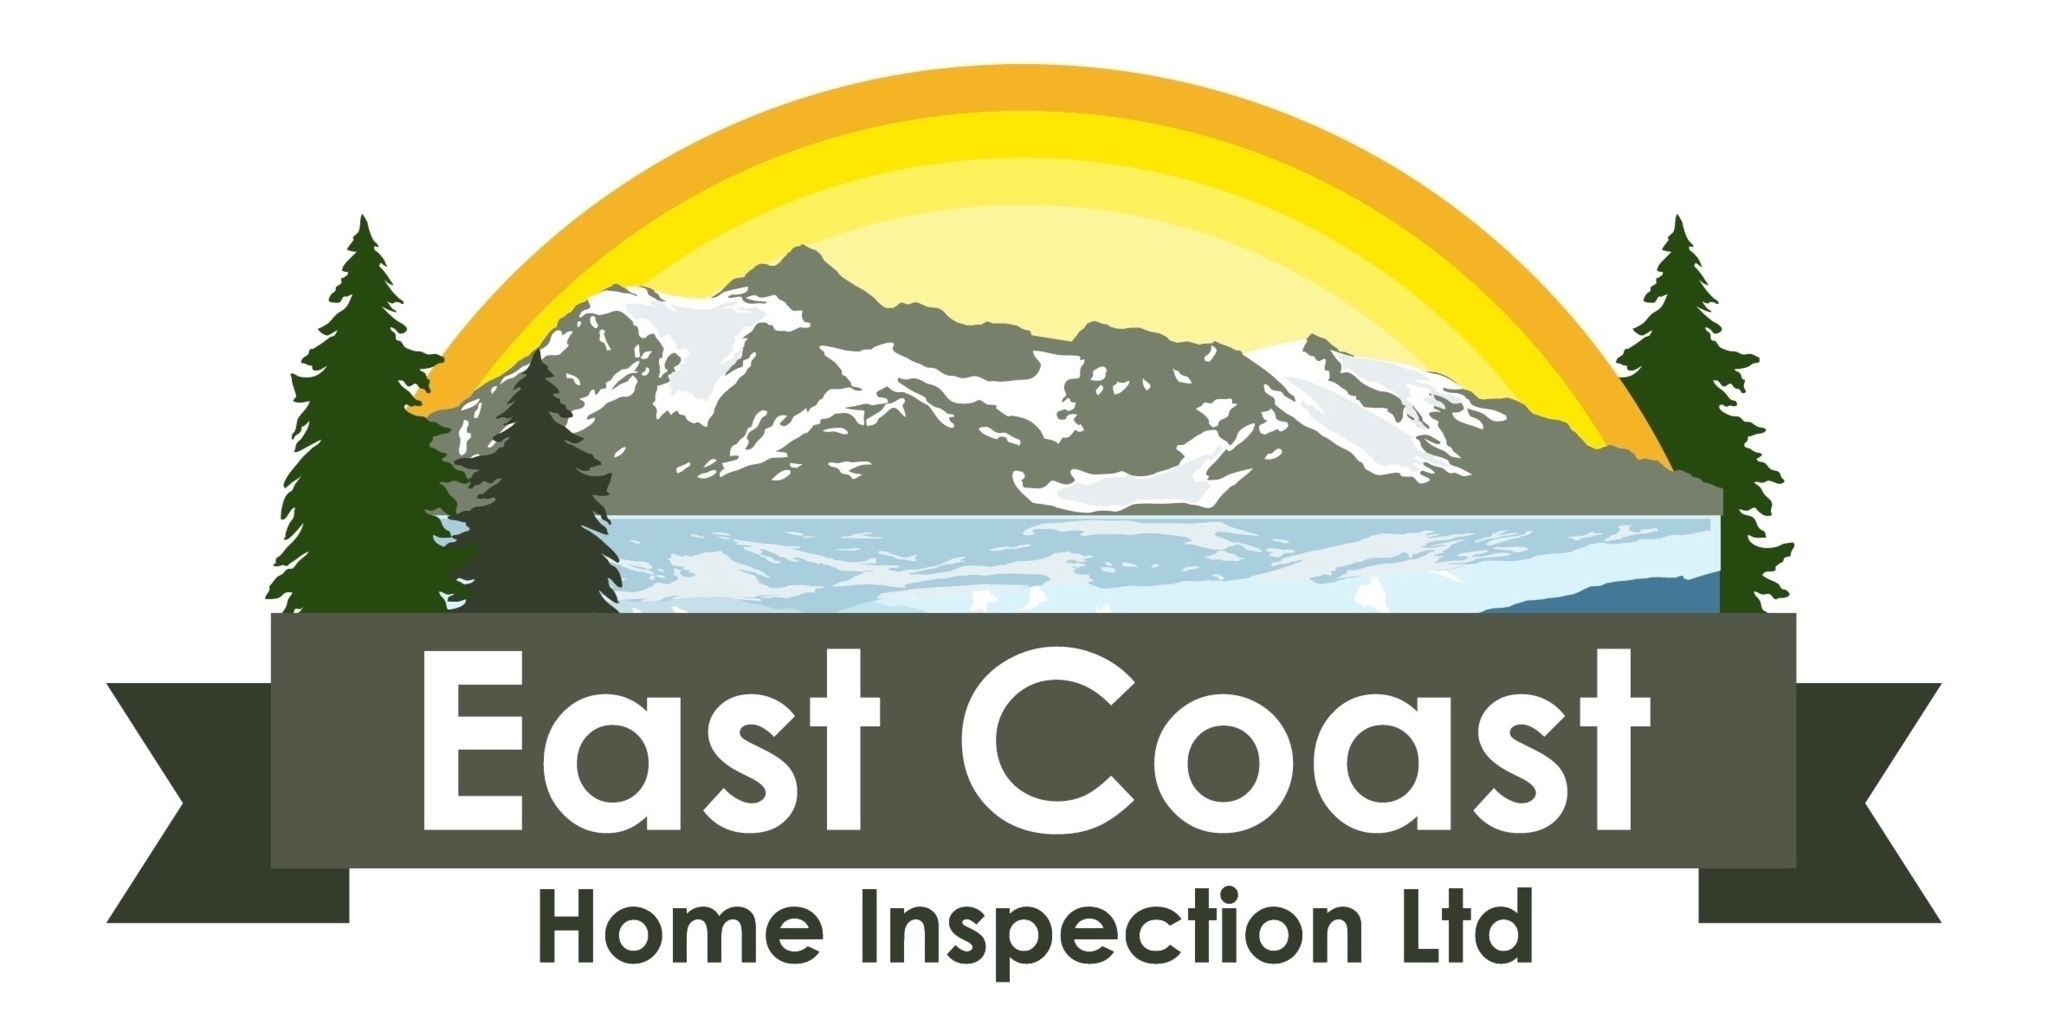 East Coast Home Inspection Ltd - Home Inspection